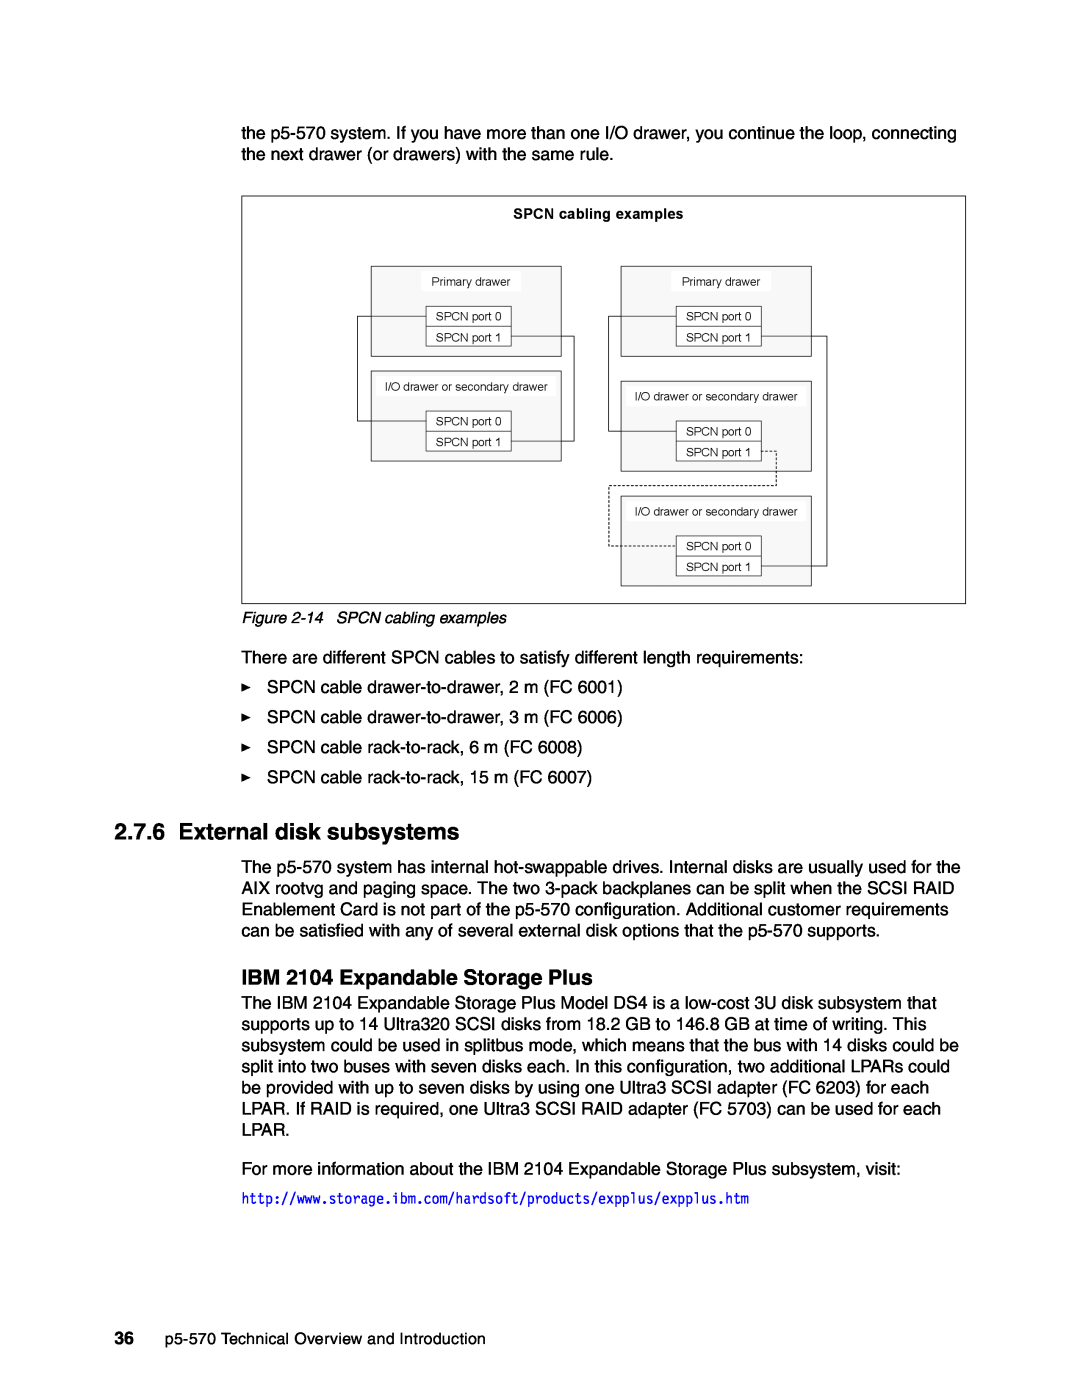 IBM P5 570 manual 2.7.6External disk subsystems, IBM 2104 Expandable Storage Plus 